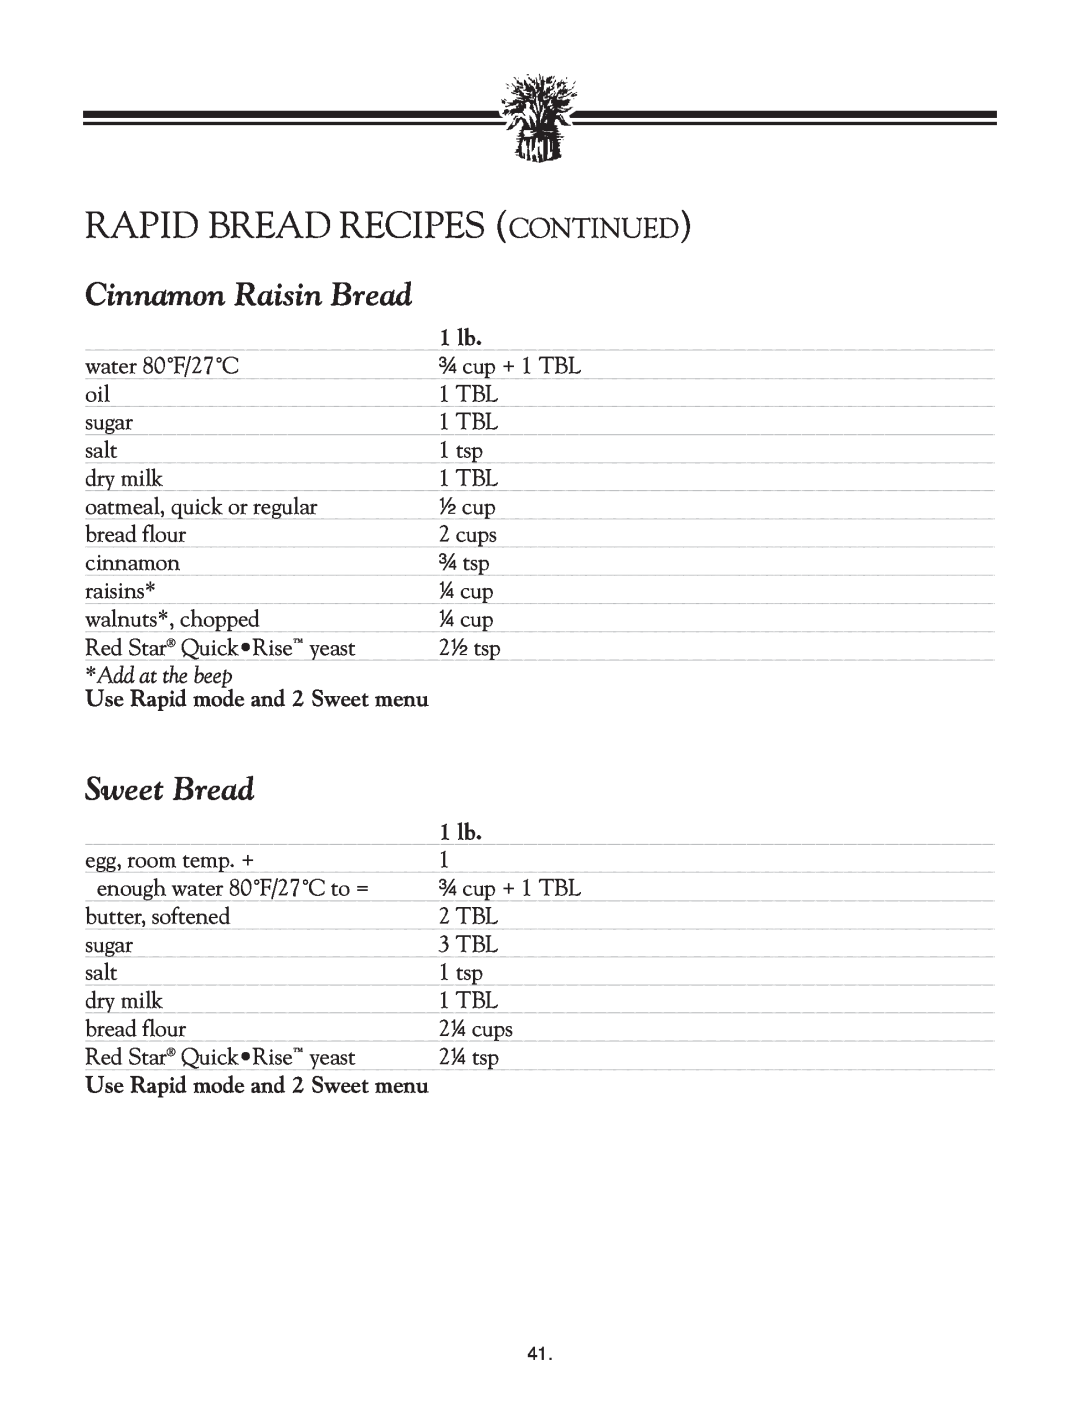 Breadman TR2828G instruction manual Cinnamon Raisin Bread, Sweet Bread, Rapid Bread Recipes Continued, Add at the beep 